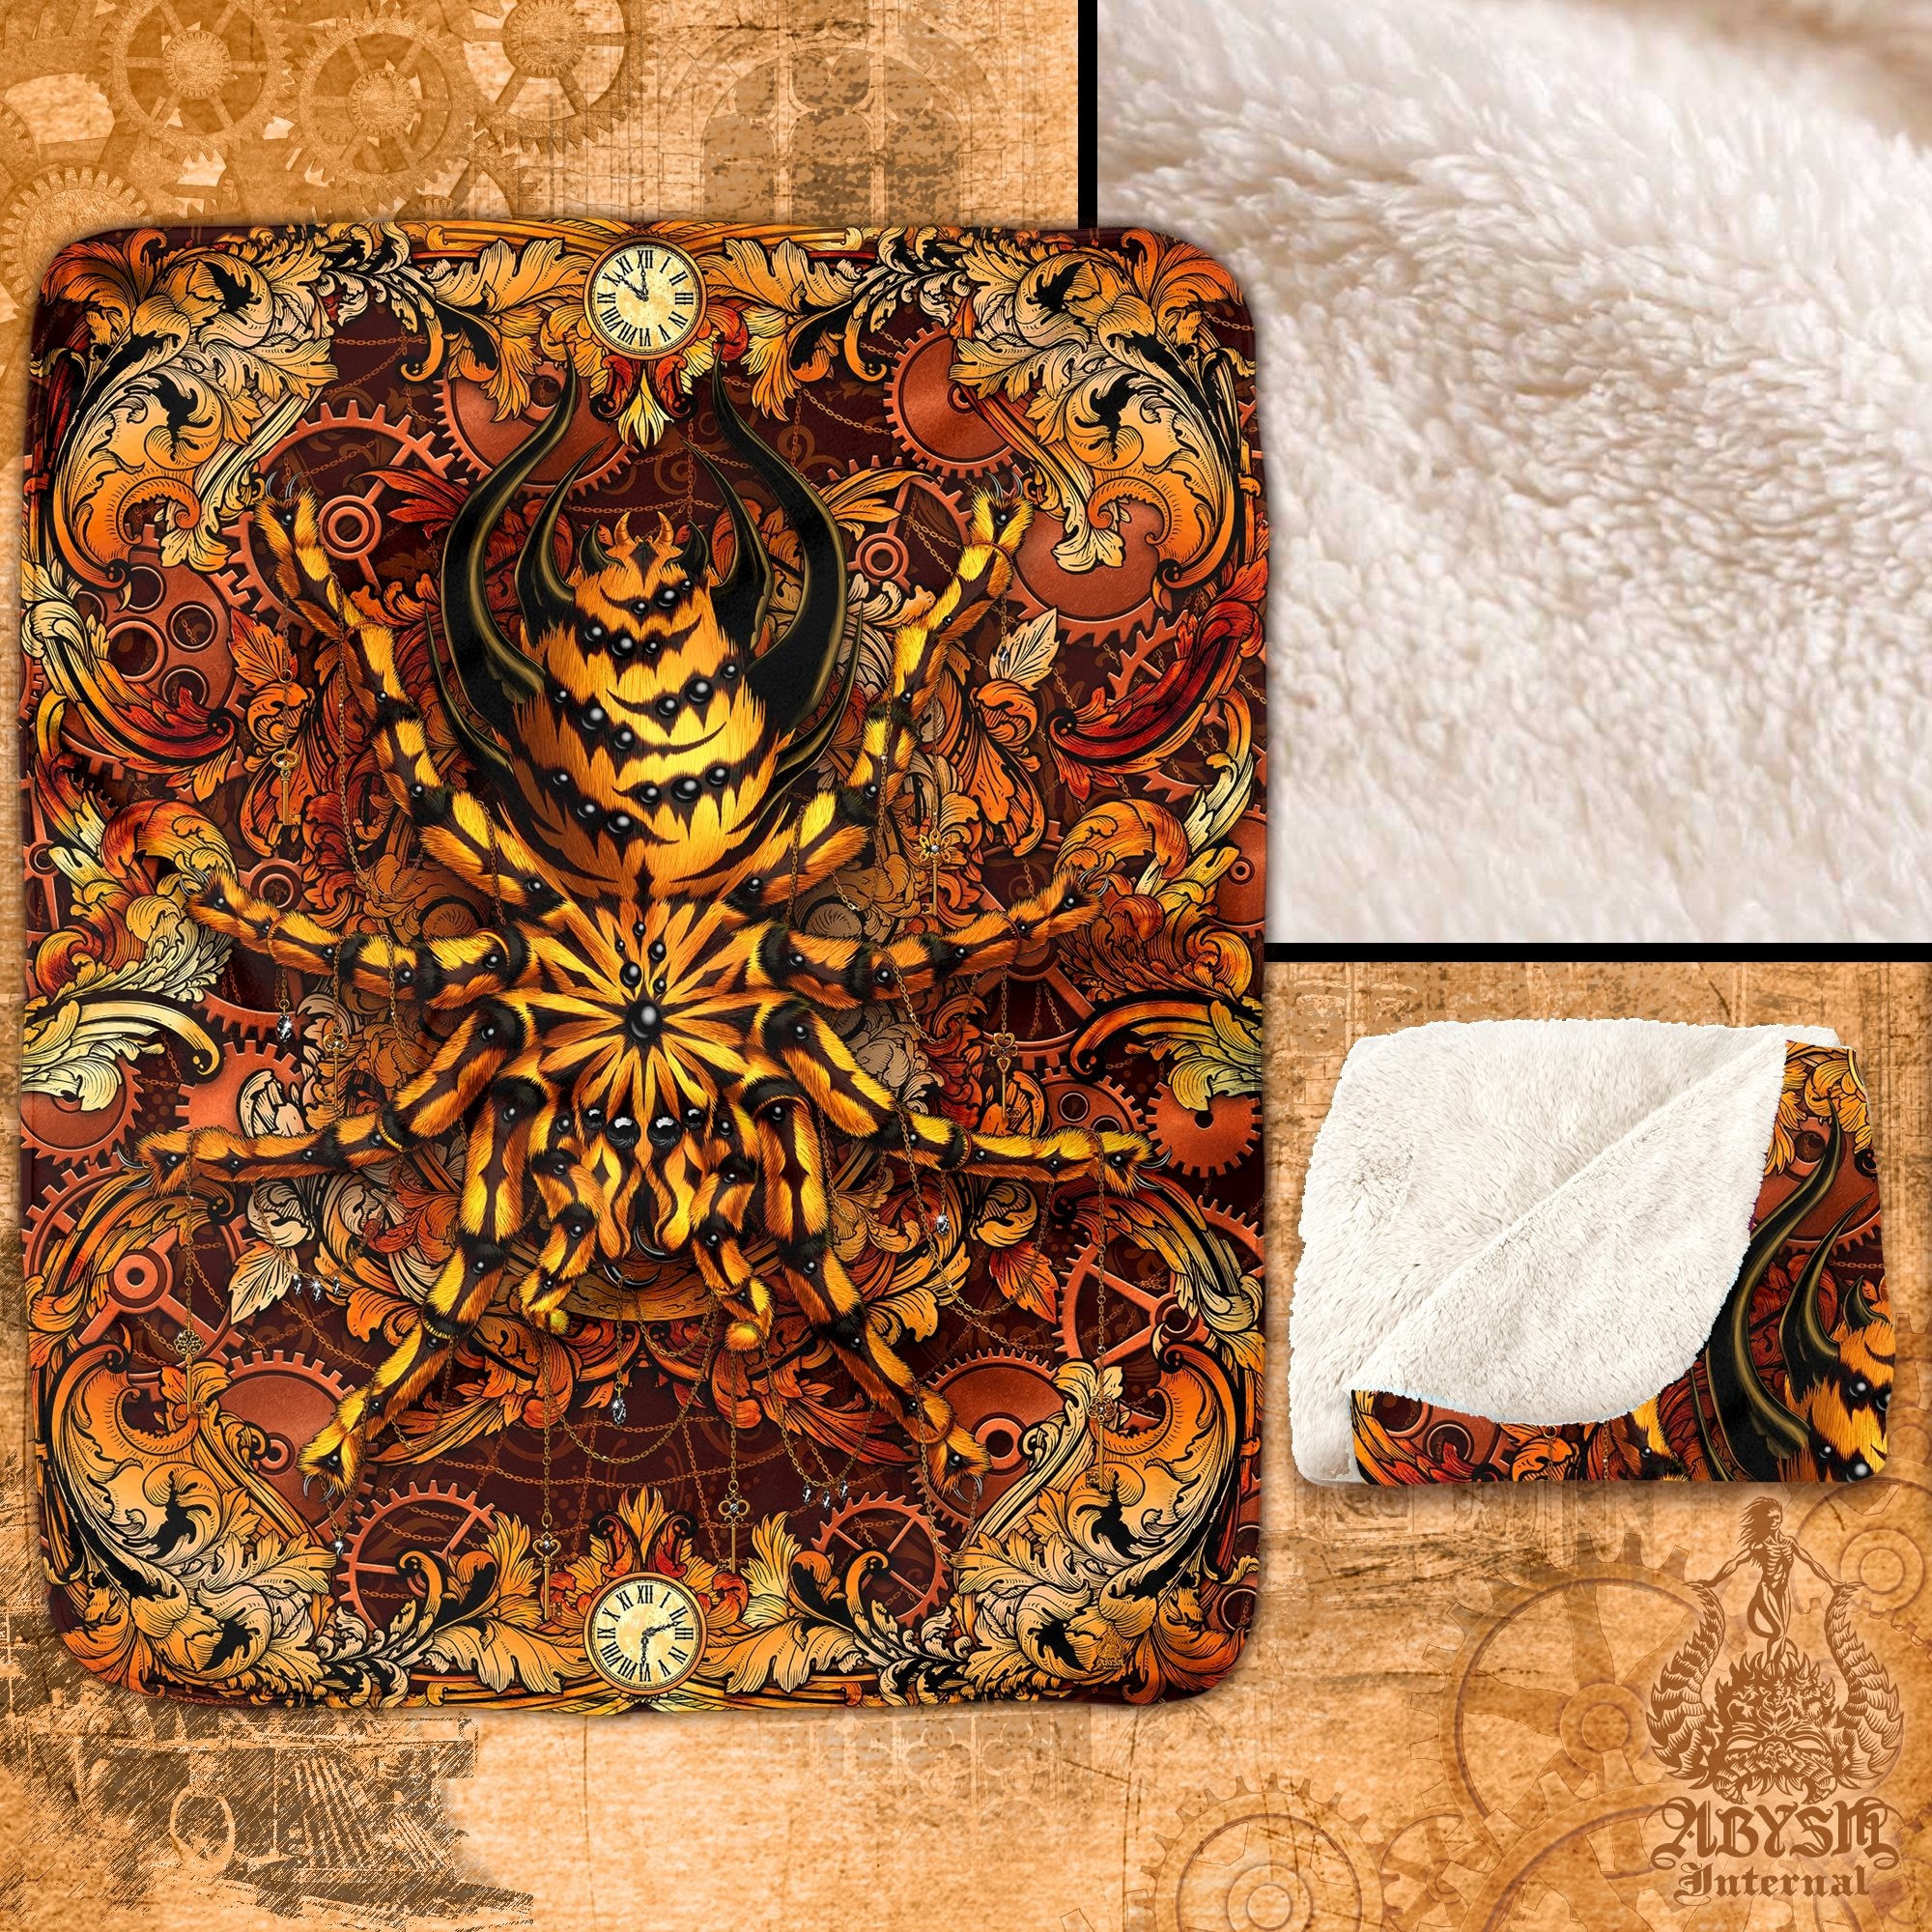 Steampunk Throw Fleece Blanket, Baroque Home Decor - Spider, Tarantula Art - Abysm Internal